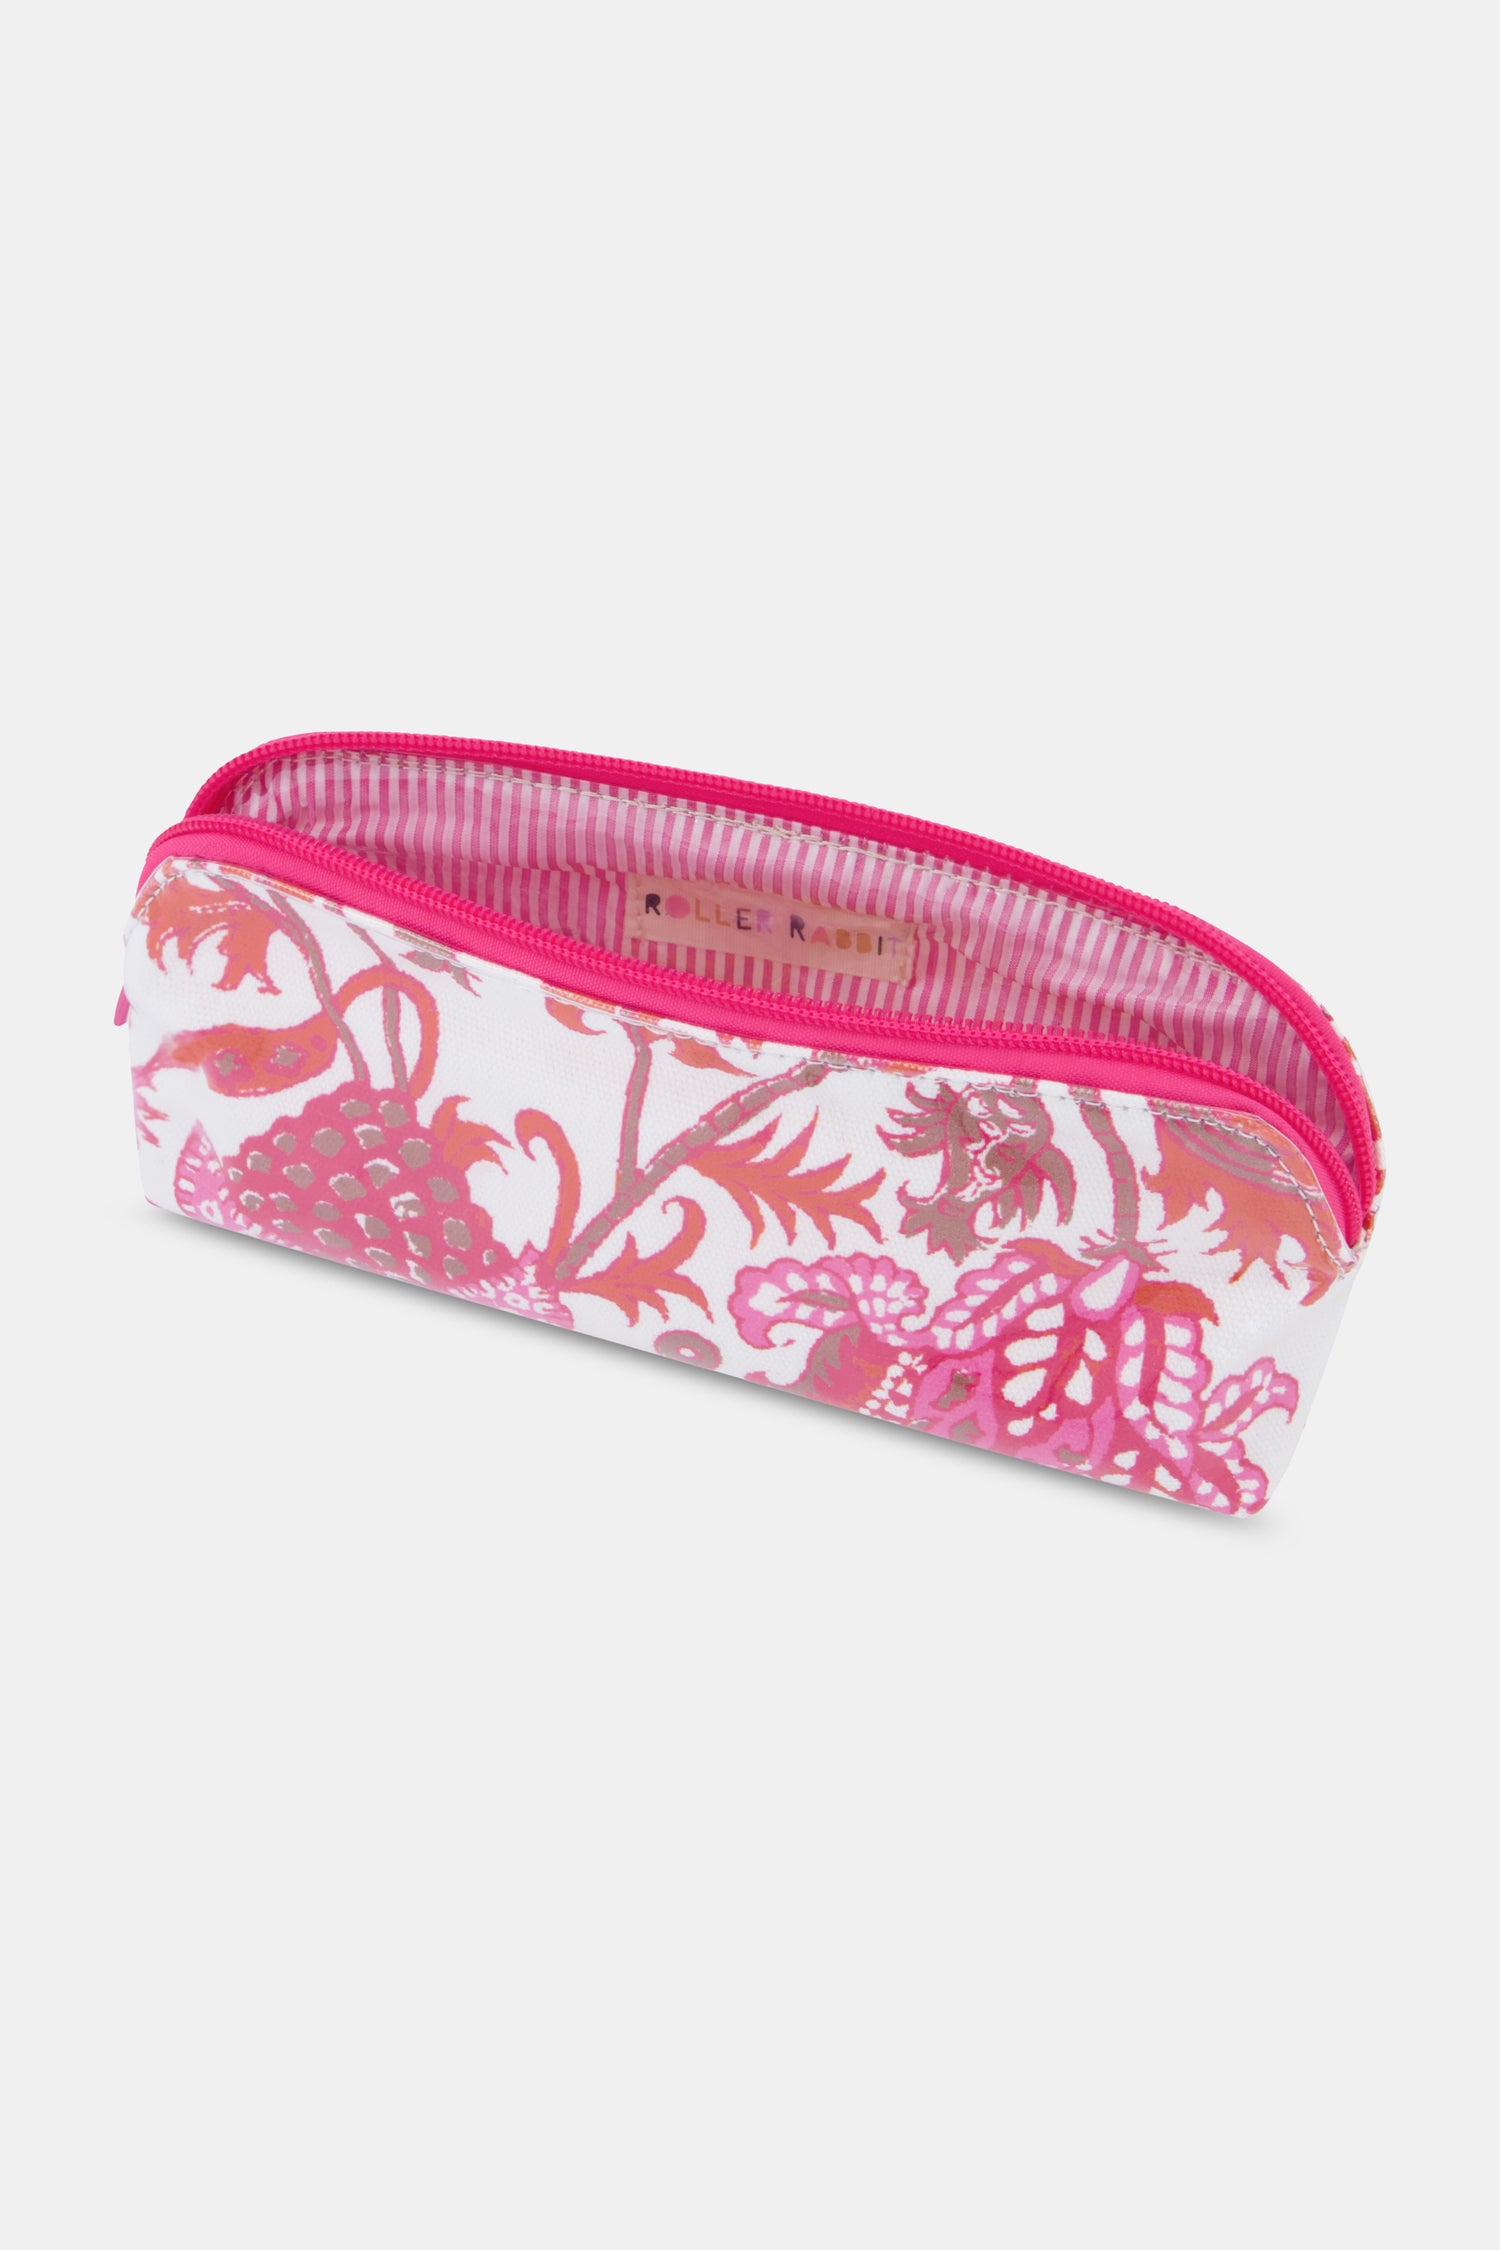 Roller Rabbit Monkey Makeup Bag Pink S